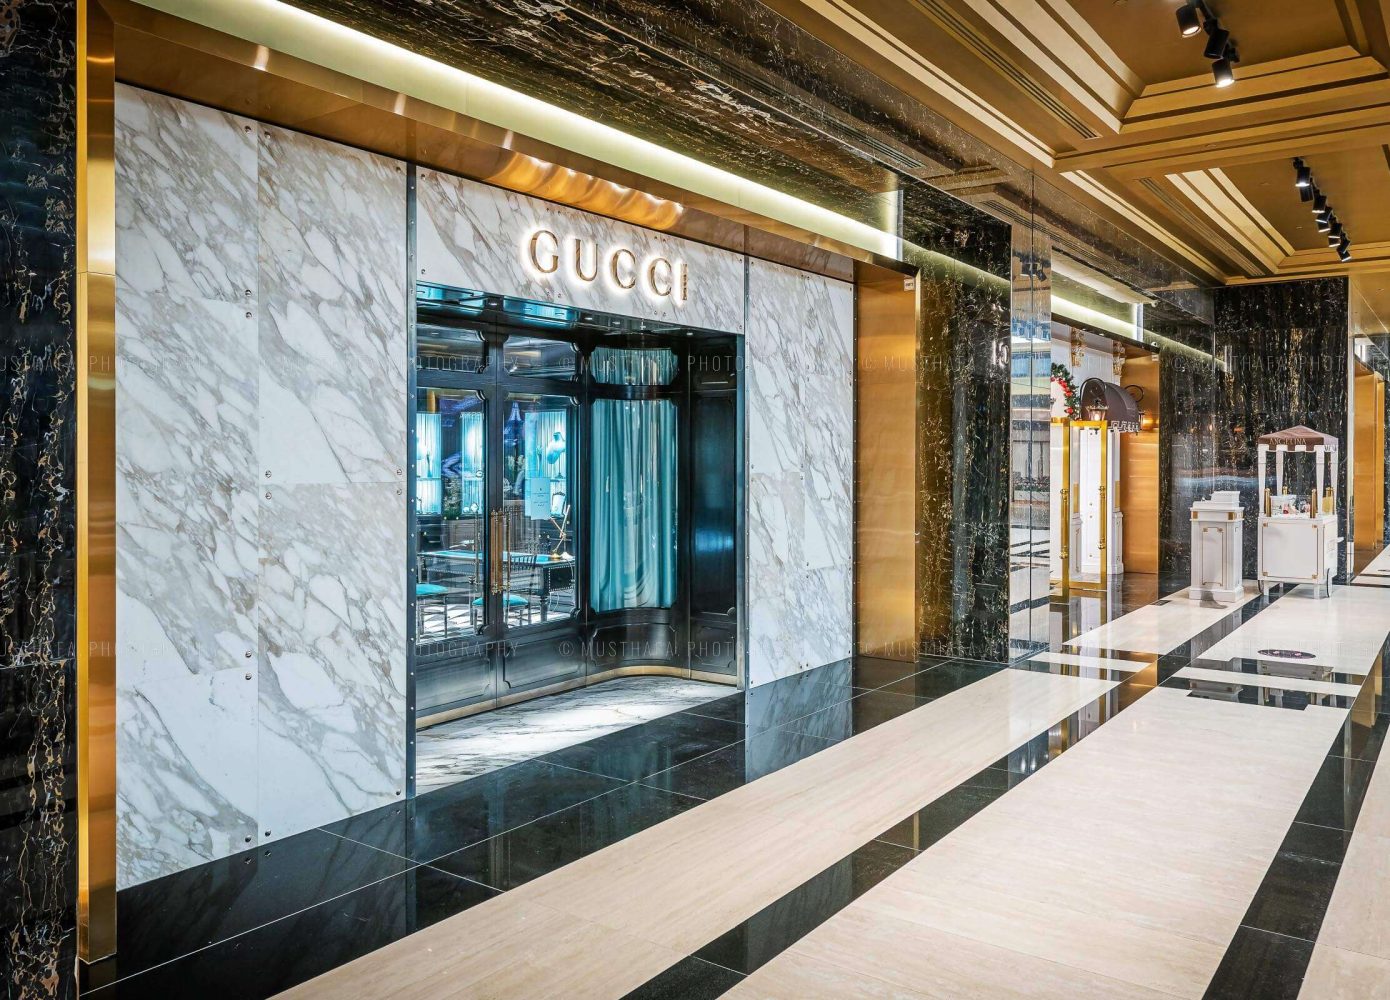 Gucci Jewellery Interior Store Photography Dubai Abu Dhabi UAE Qatar Doha Kuwait Bahrain Oman Saudi Arabia KSA Riyadh Bahrain 02